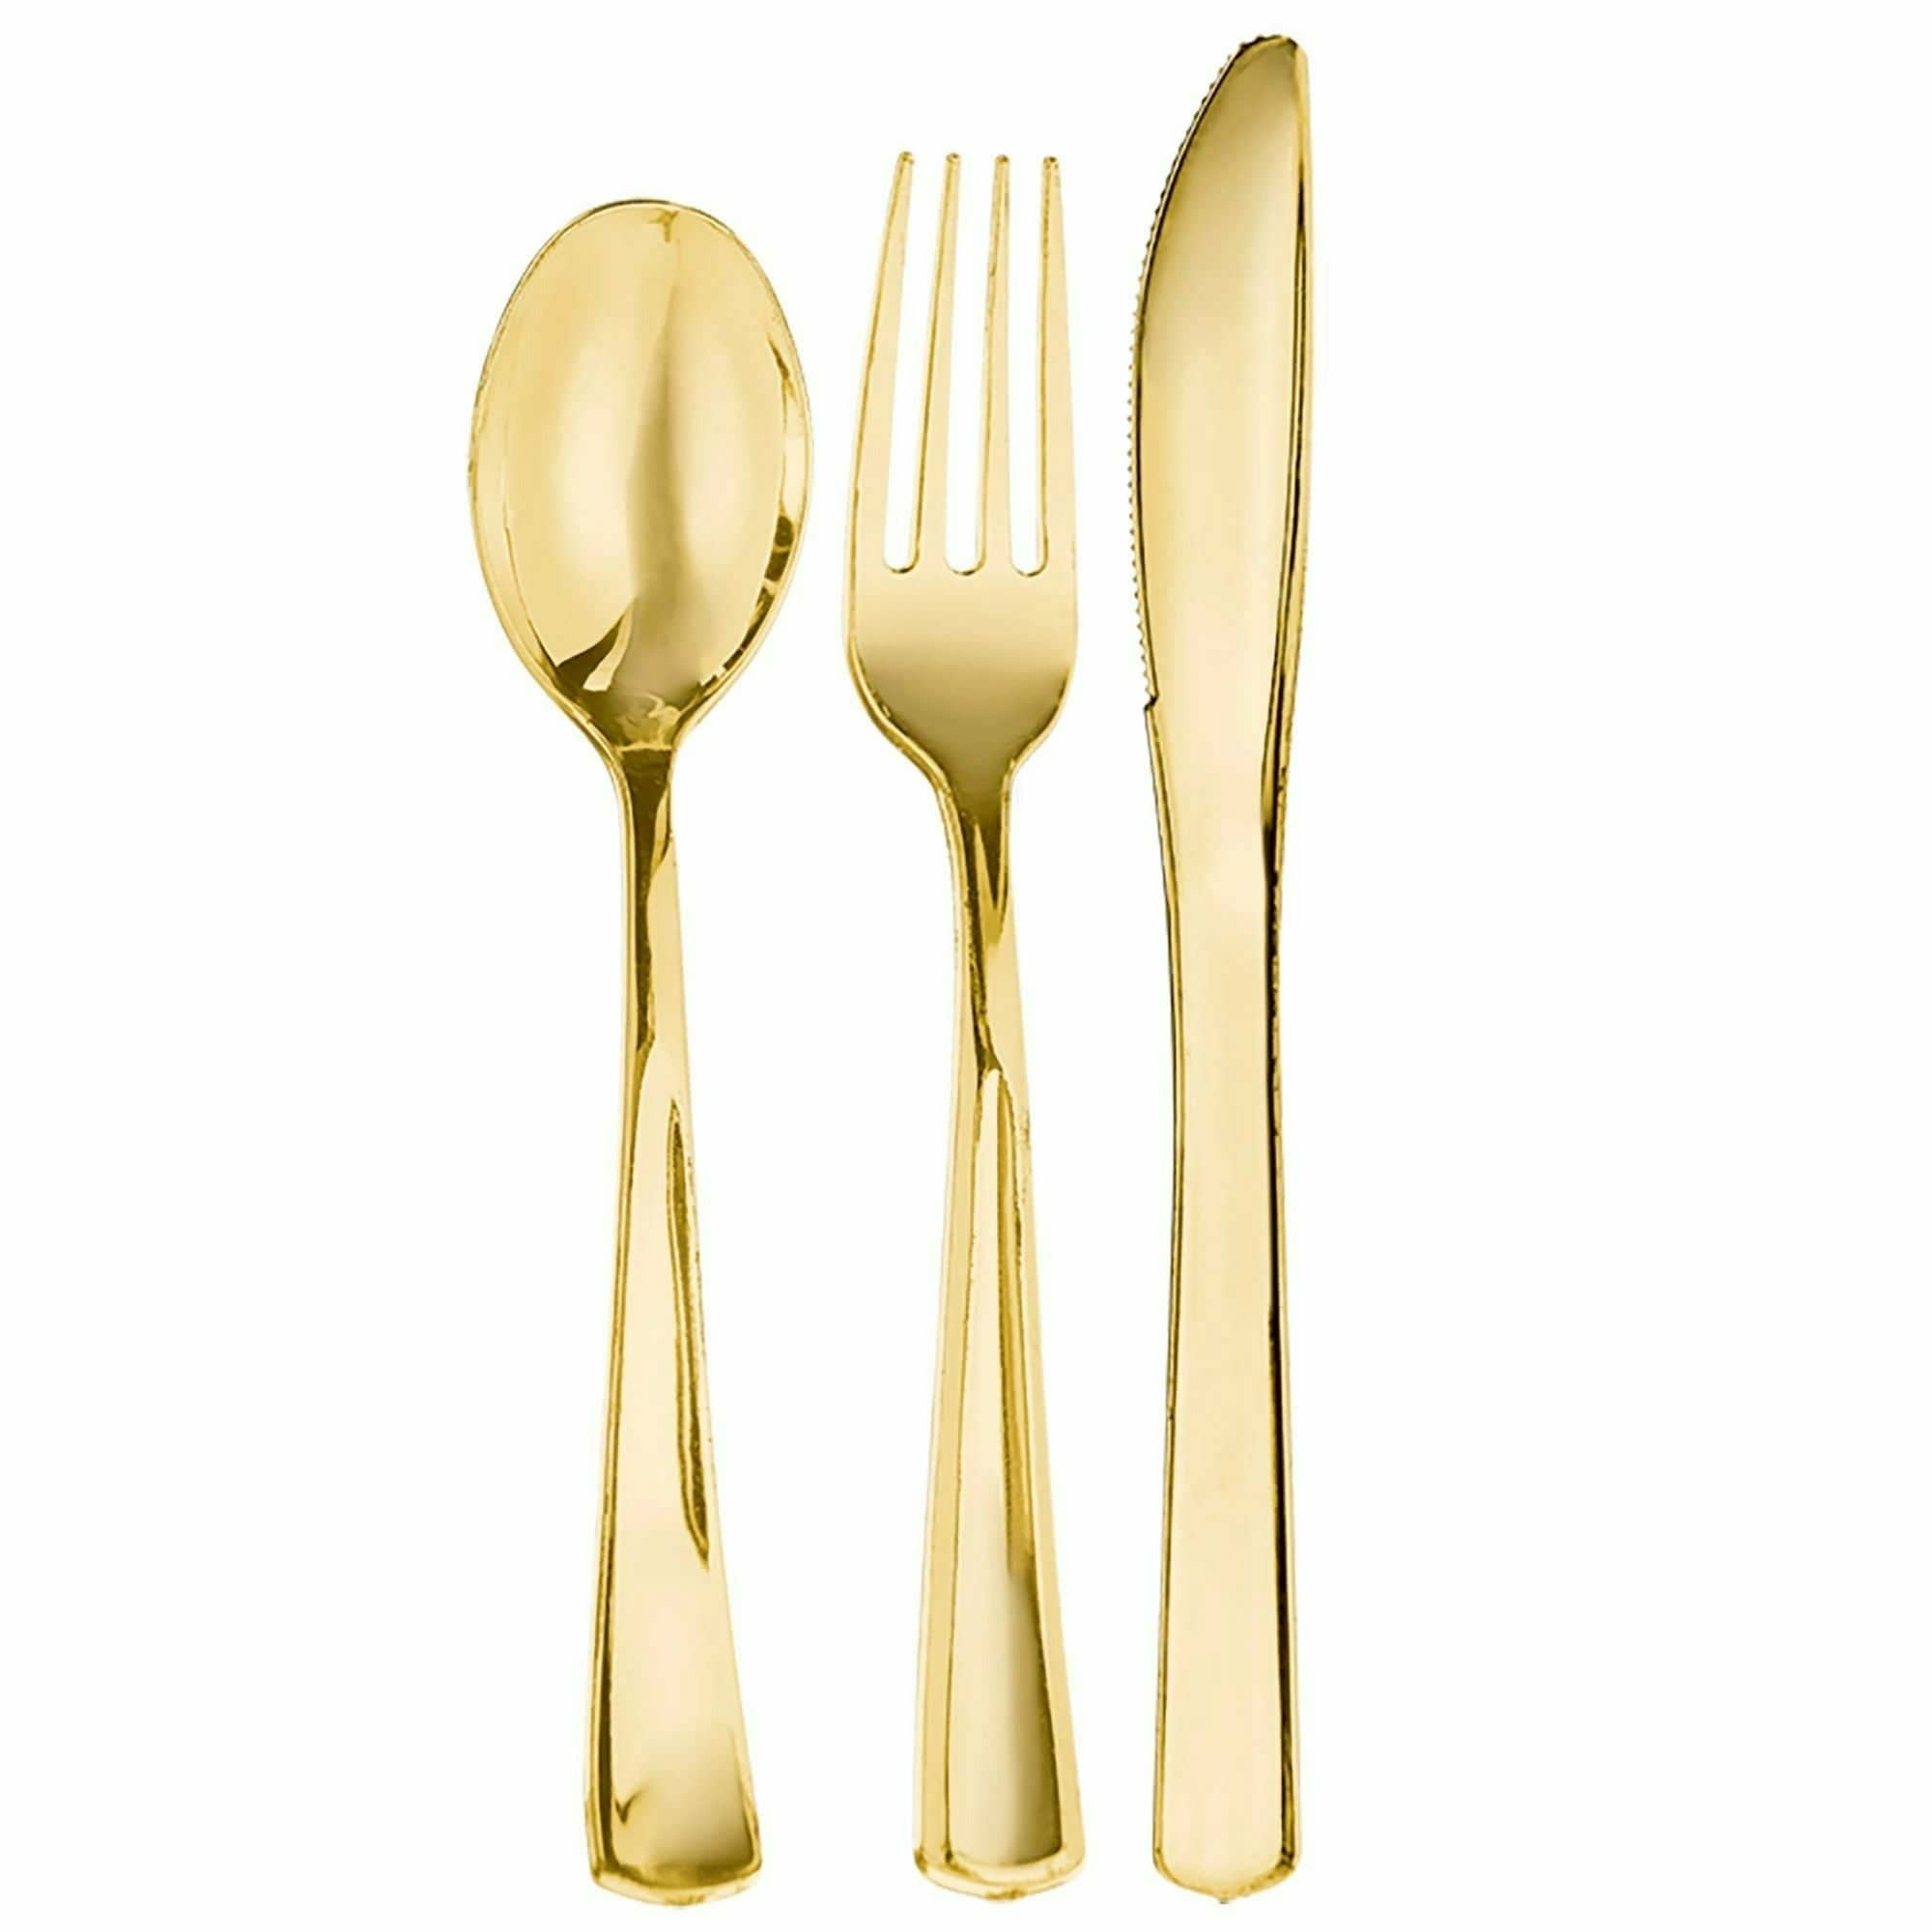 Amscan BASIC Premium Metallic Assorted Cutlery Classic Handle - Gold